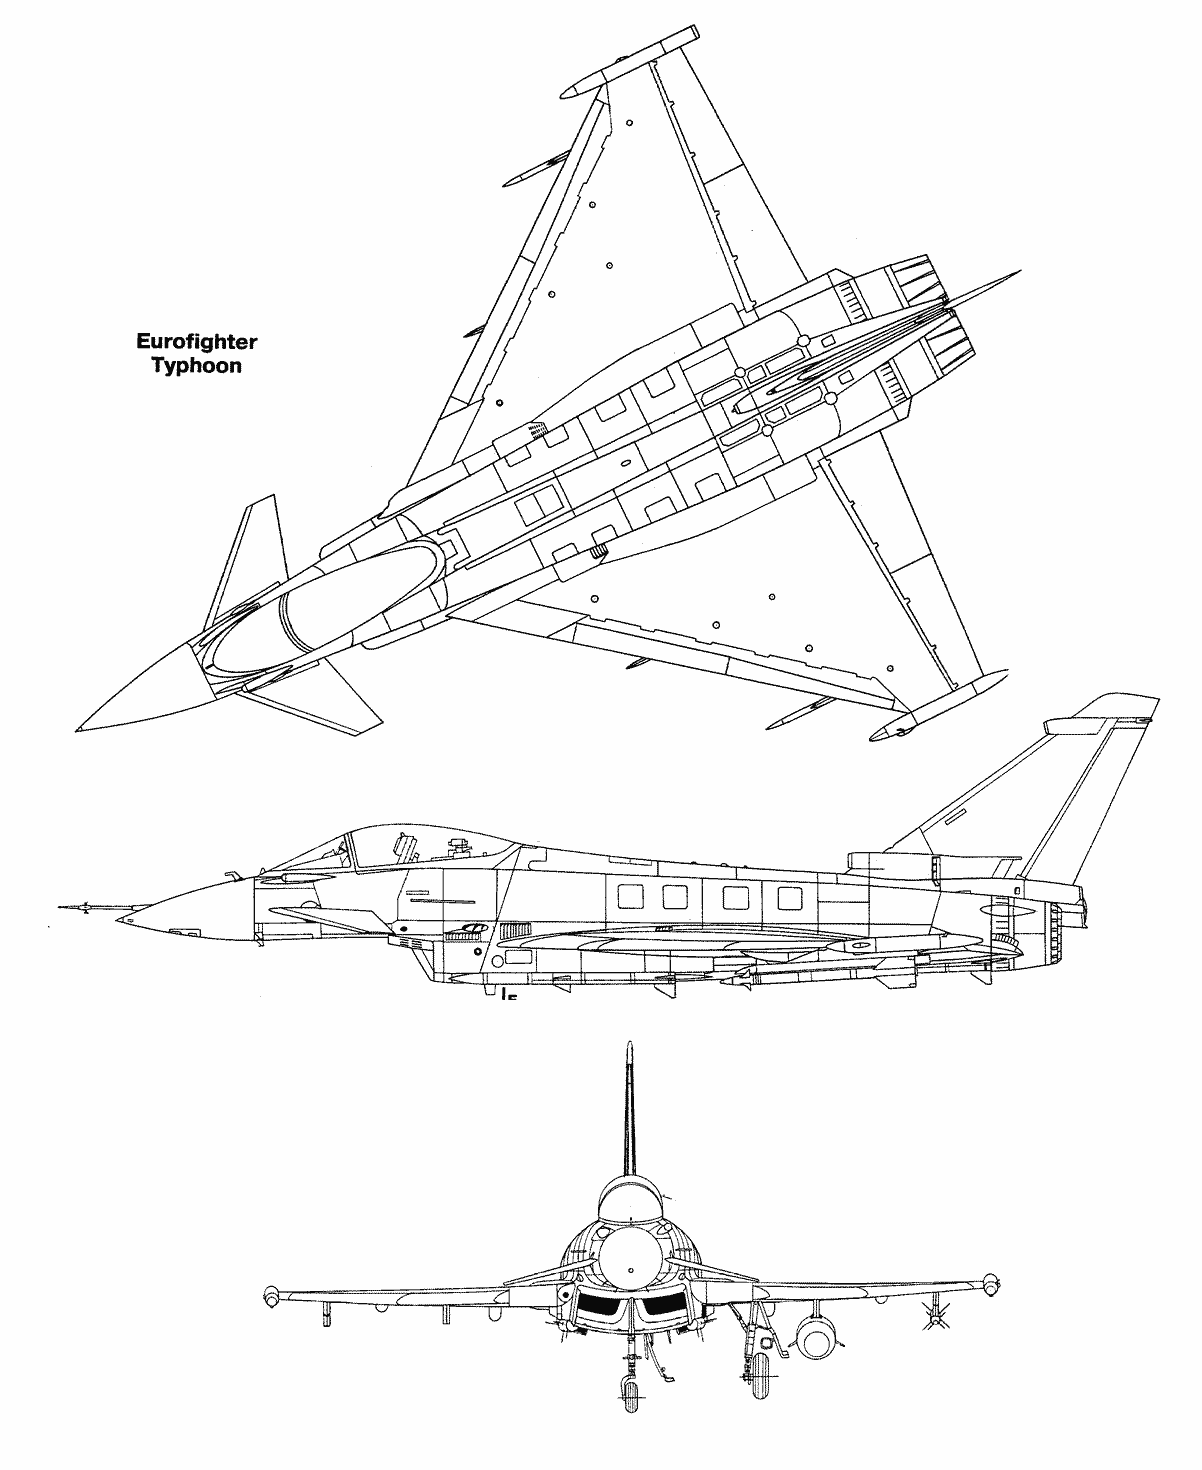 Planos del Eurofighter Typhoon